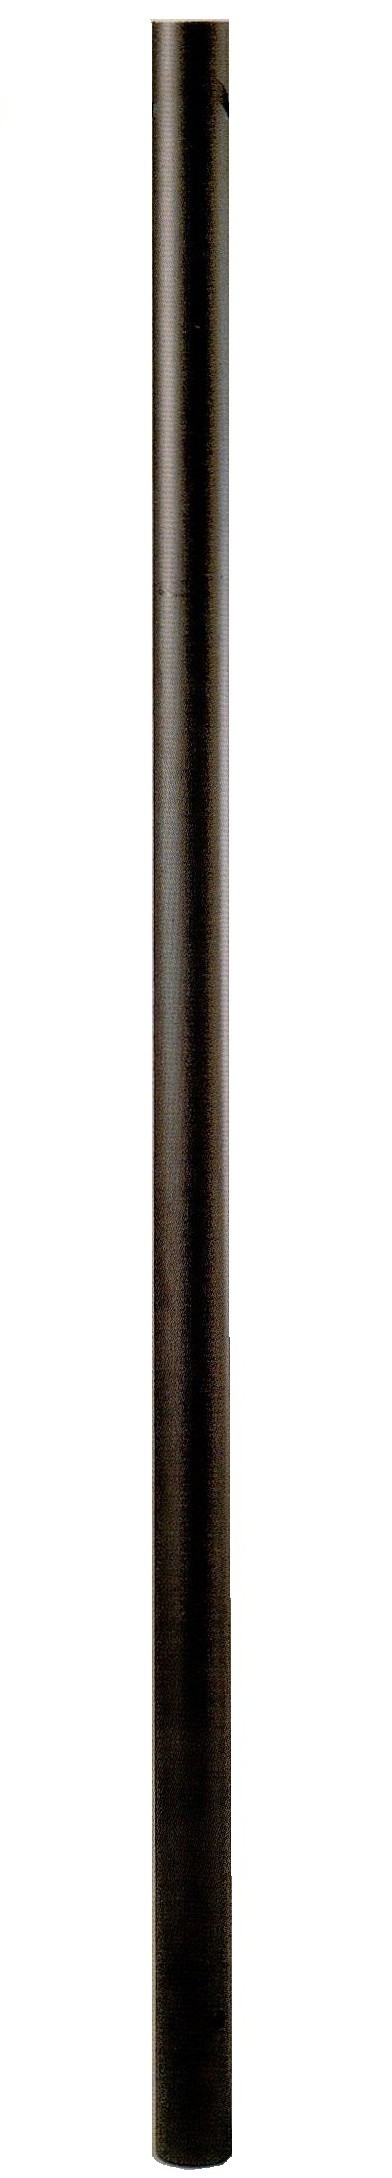 ZBP 12 foot 4" Diameter Cast Aluminum Direct Burial Pole 